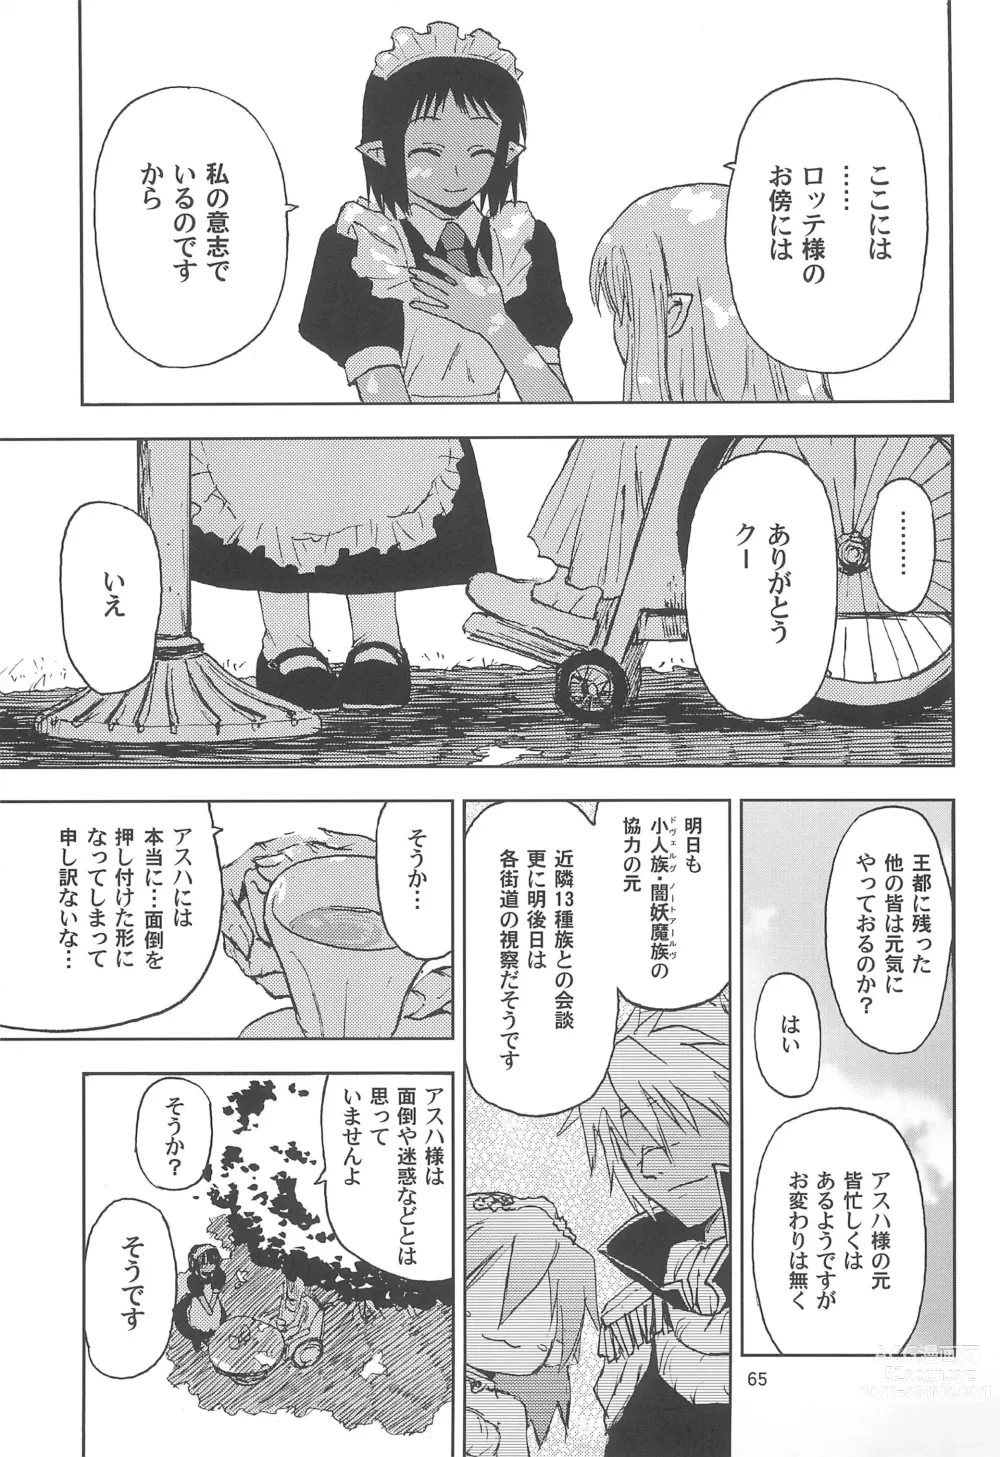 Page 65 of doujinshi Maigo no Maigo no Hime-sama Plus